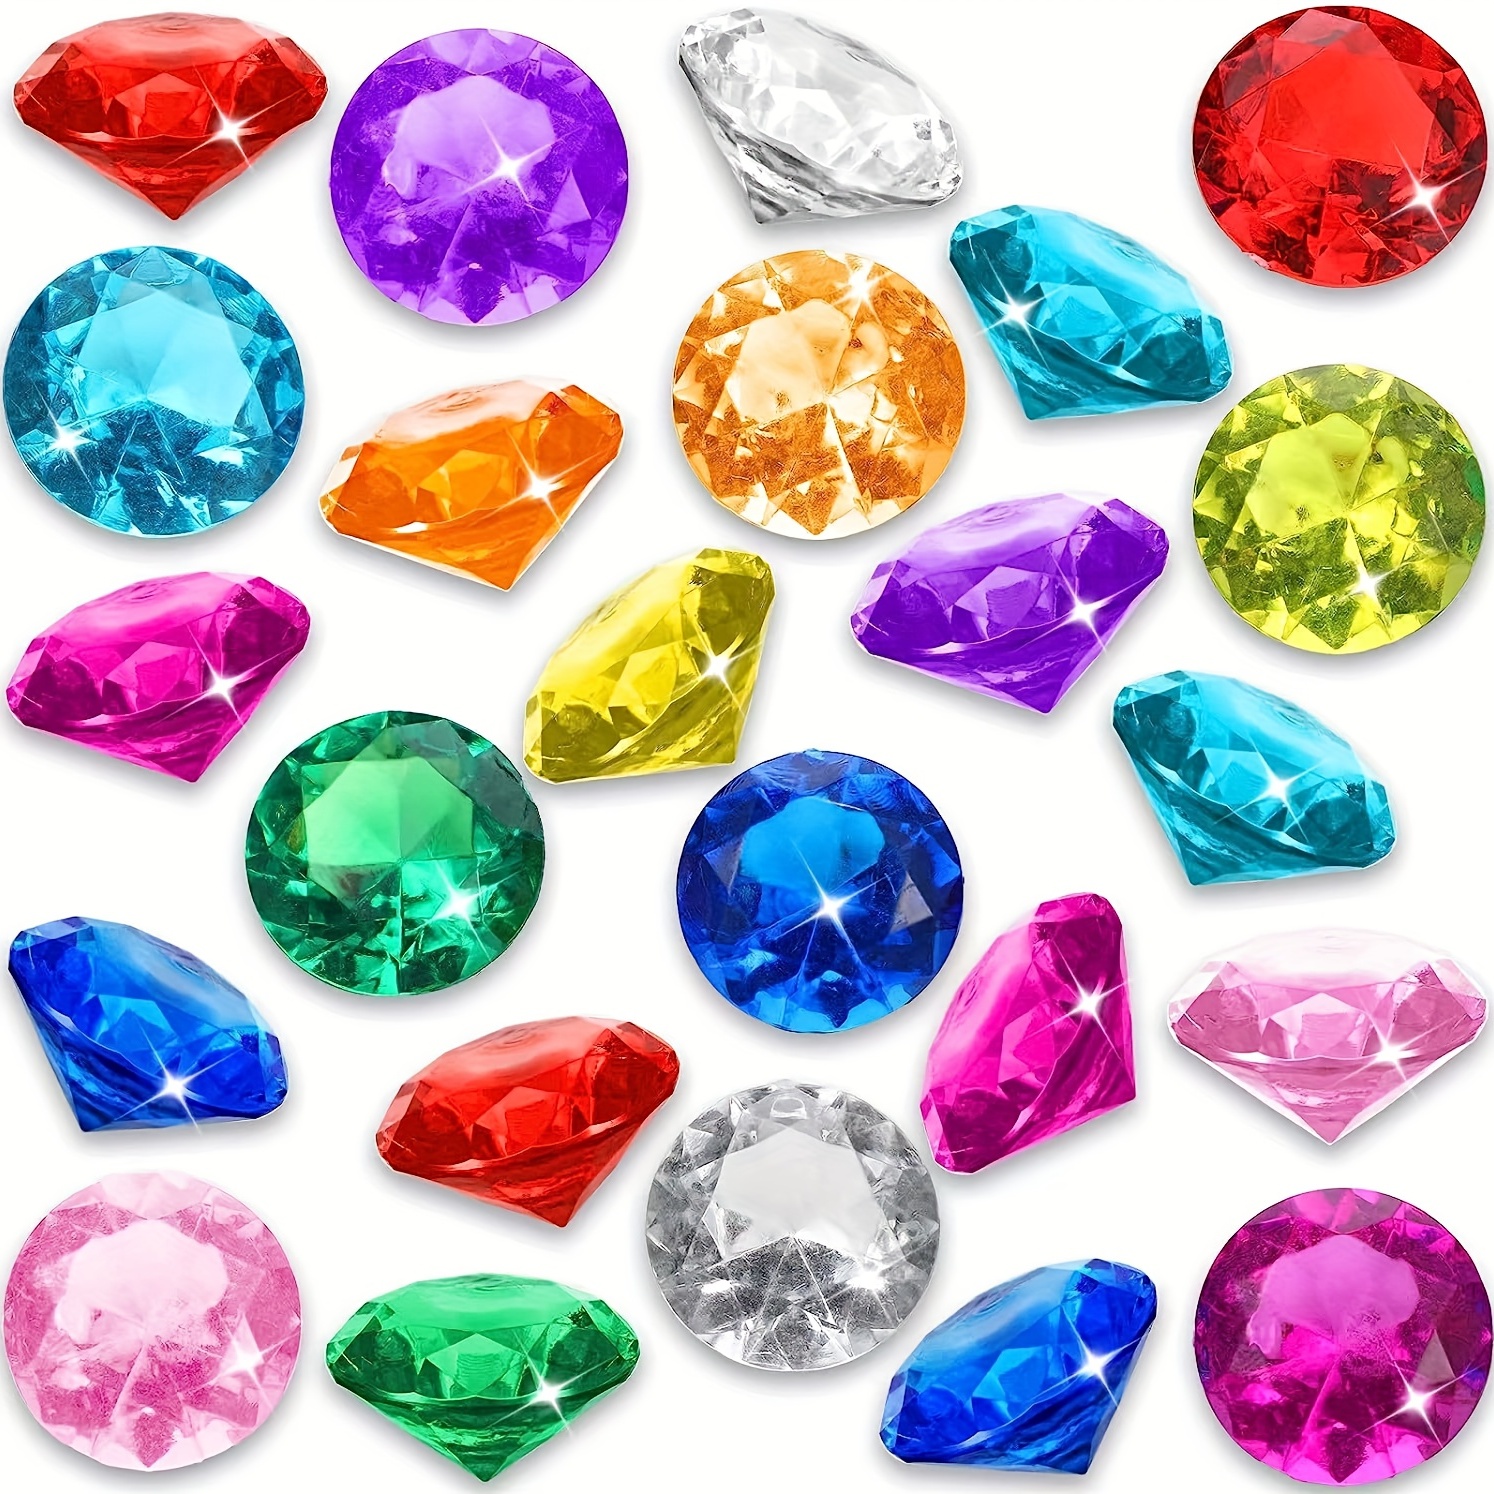 30PCS Boys Girls Multi-Colored Diamond Gems Toy Pirate Treasure